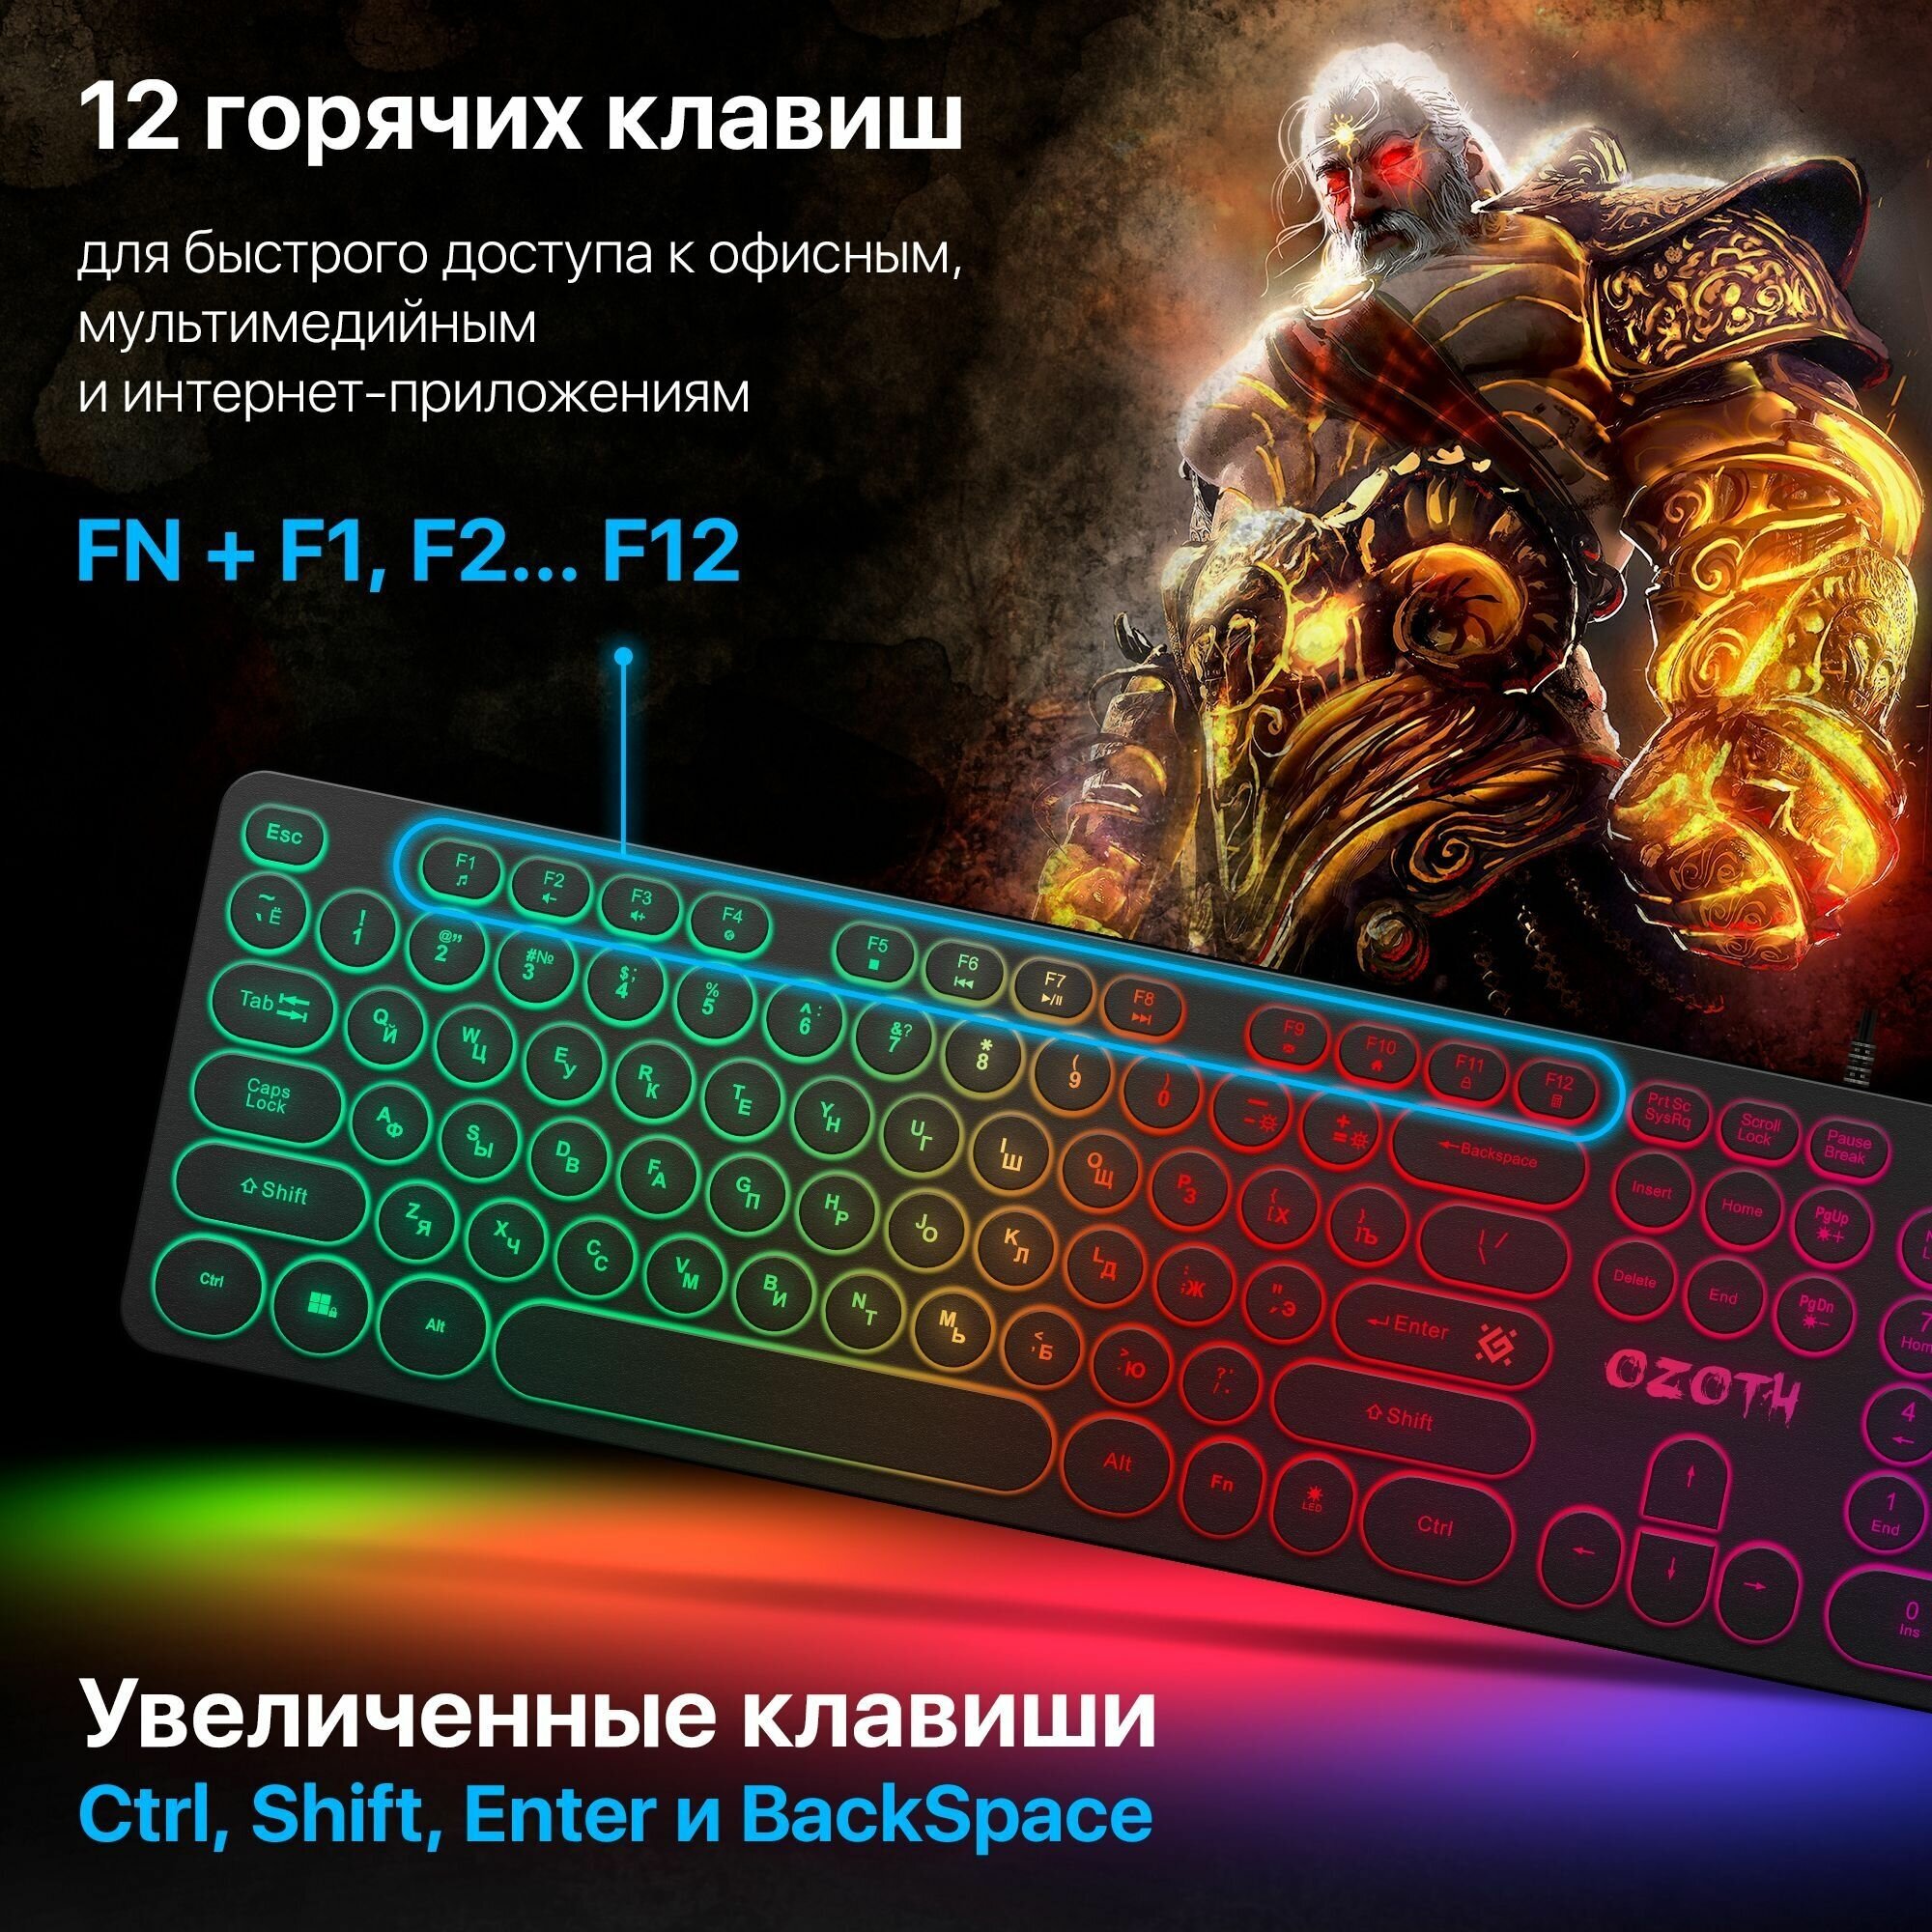 Клавиатура usb ozoth gk-106 black ru 45106 defender